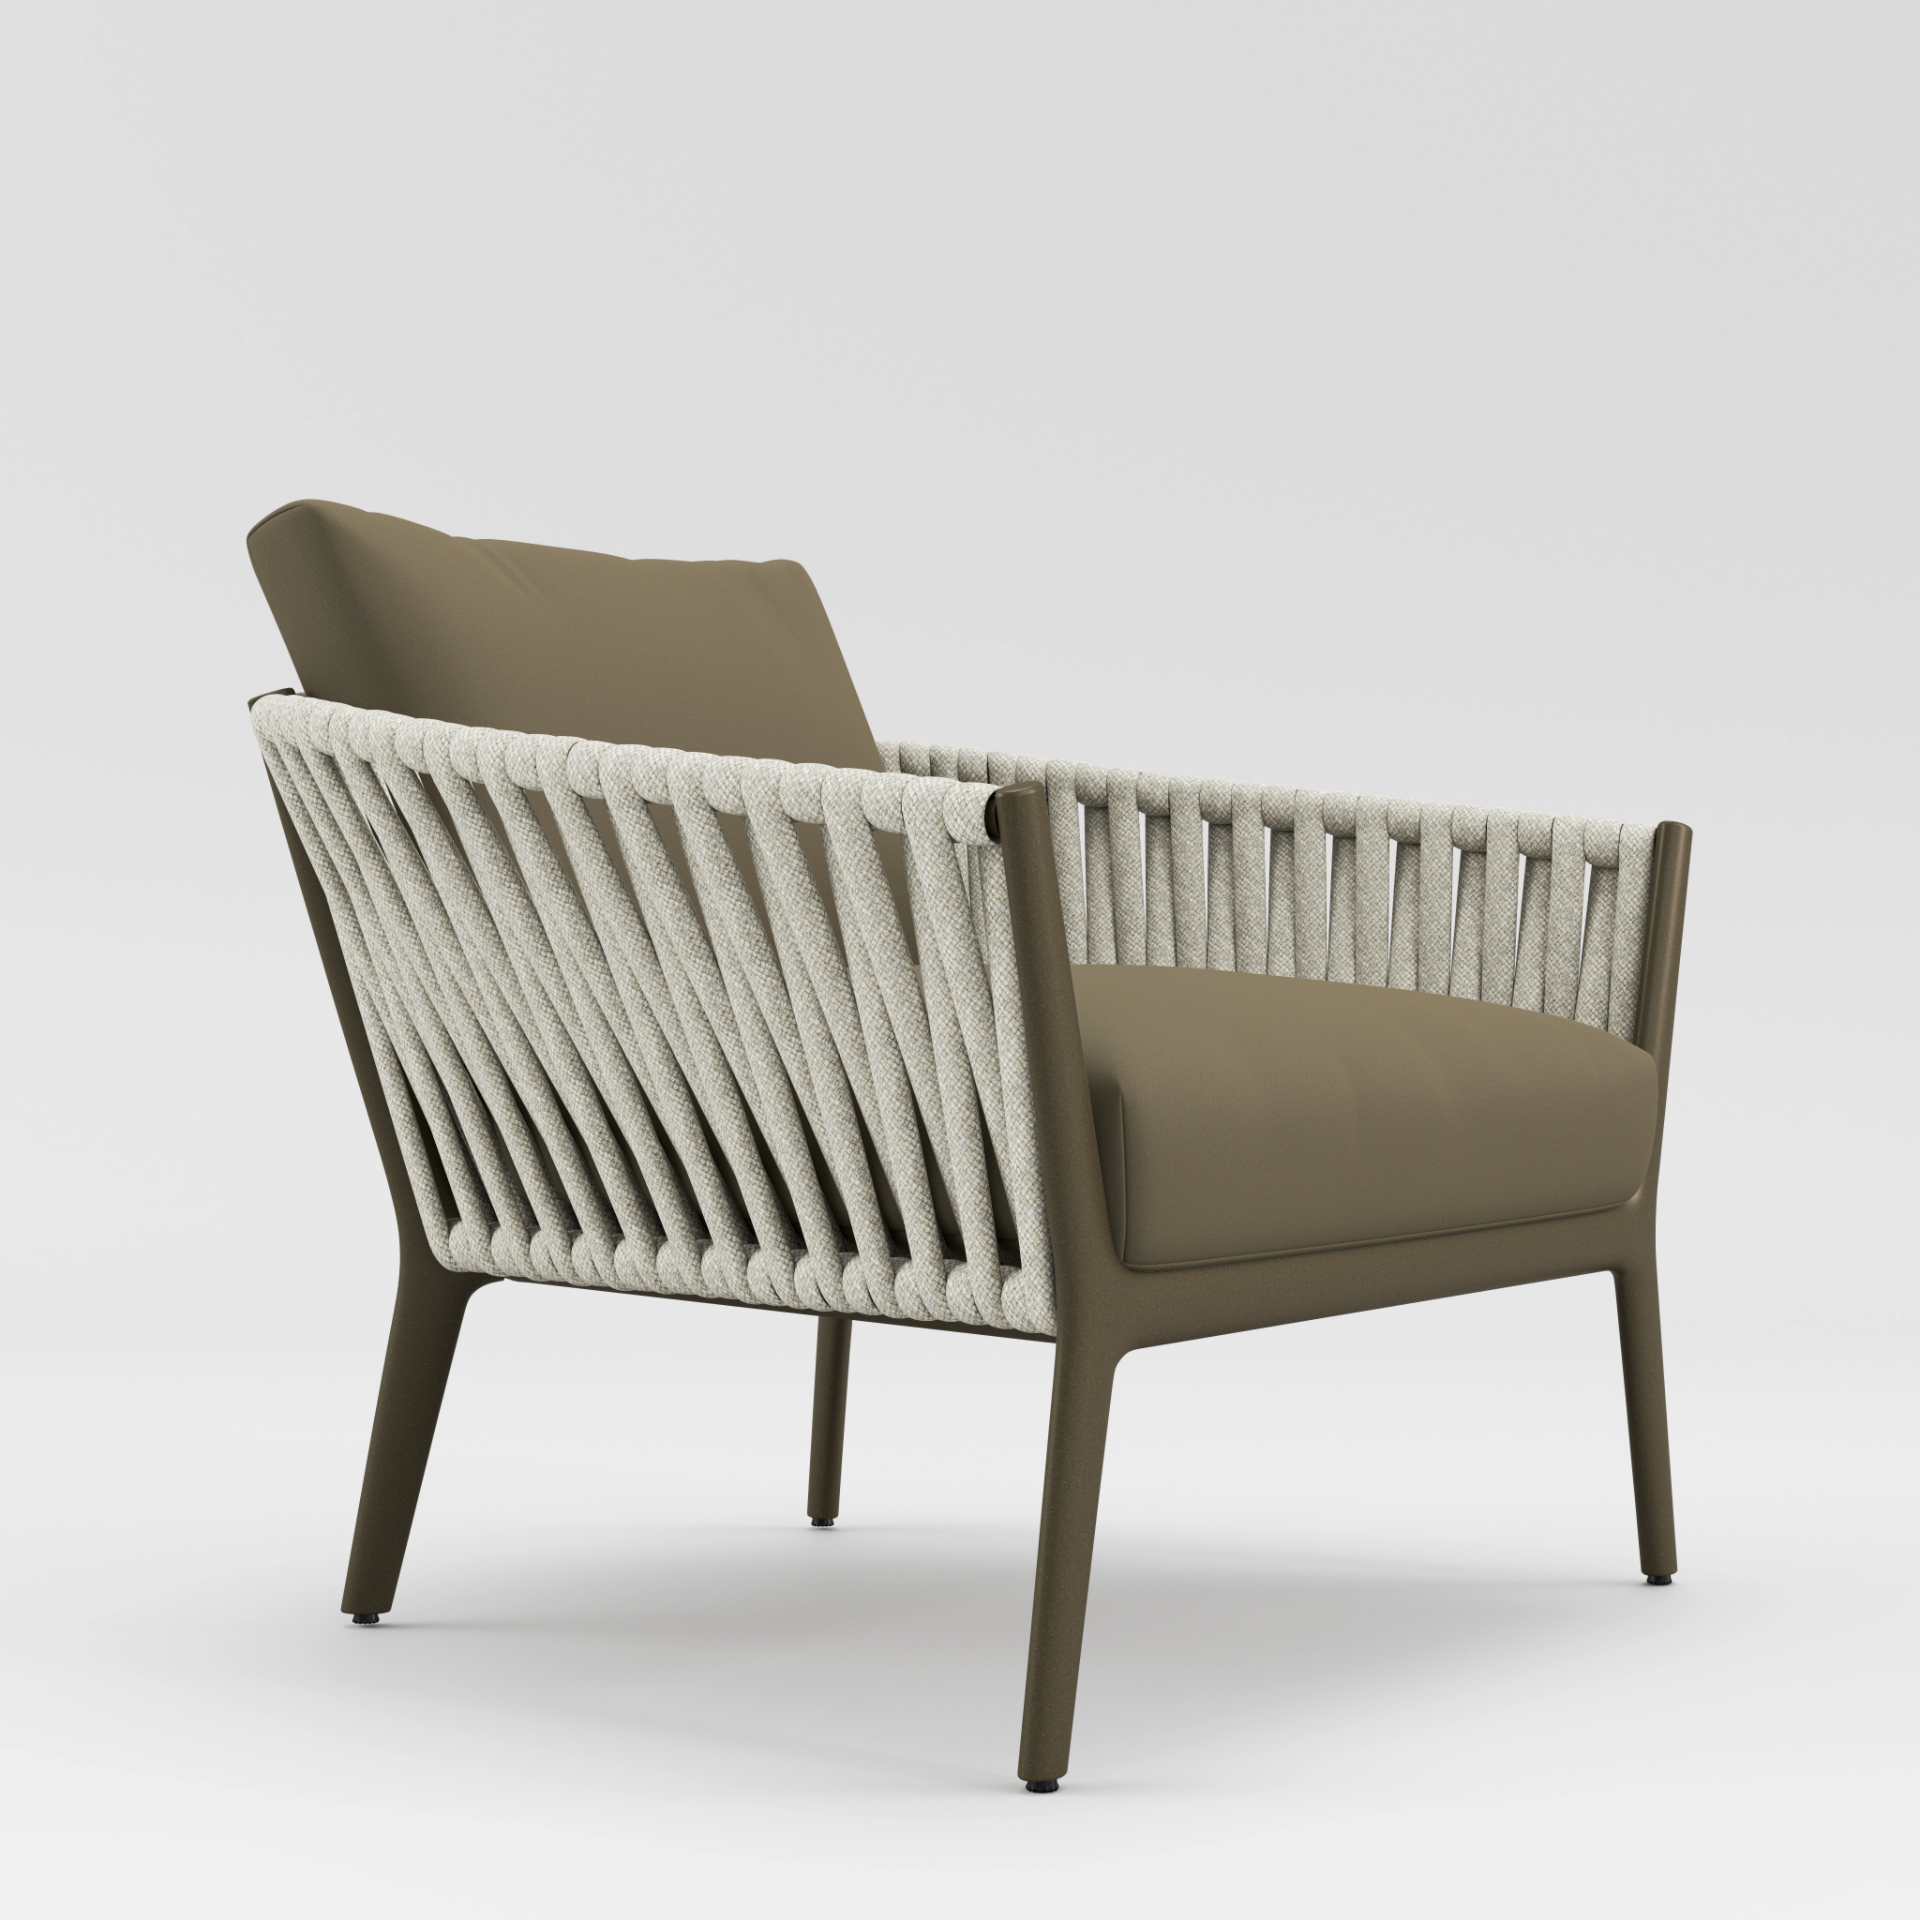 H Lounge Chair by Brown Jordan